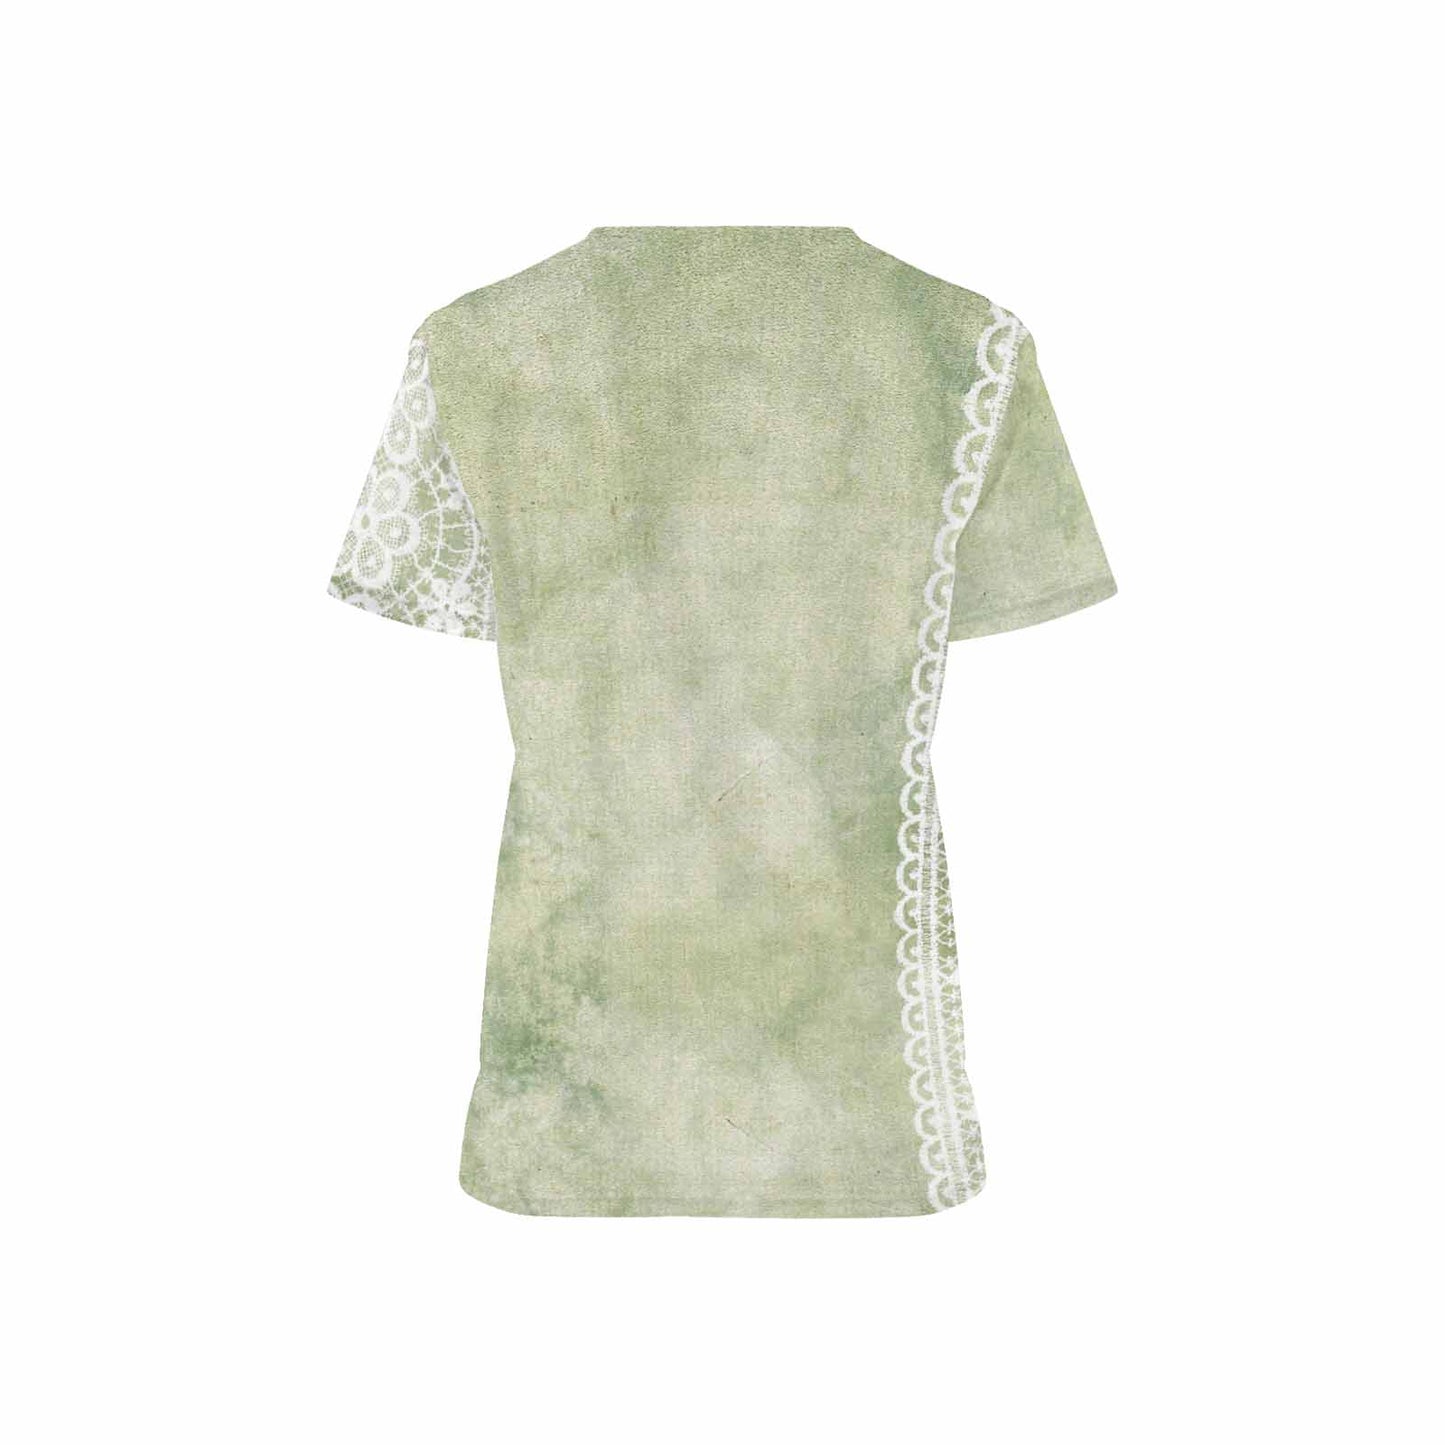 Victorian lace print professional scrubs, nurses scrub, unisex, design 42